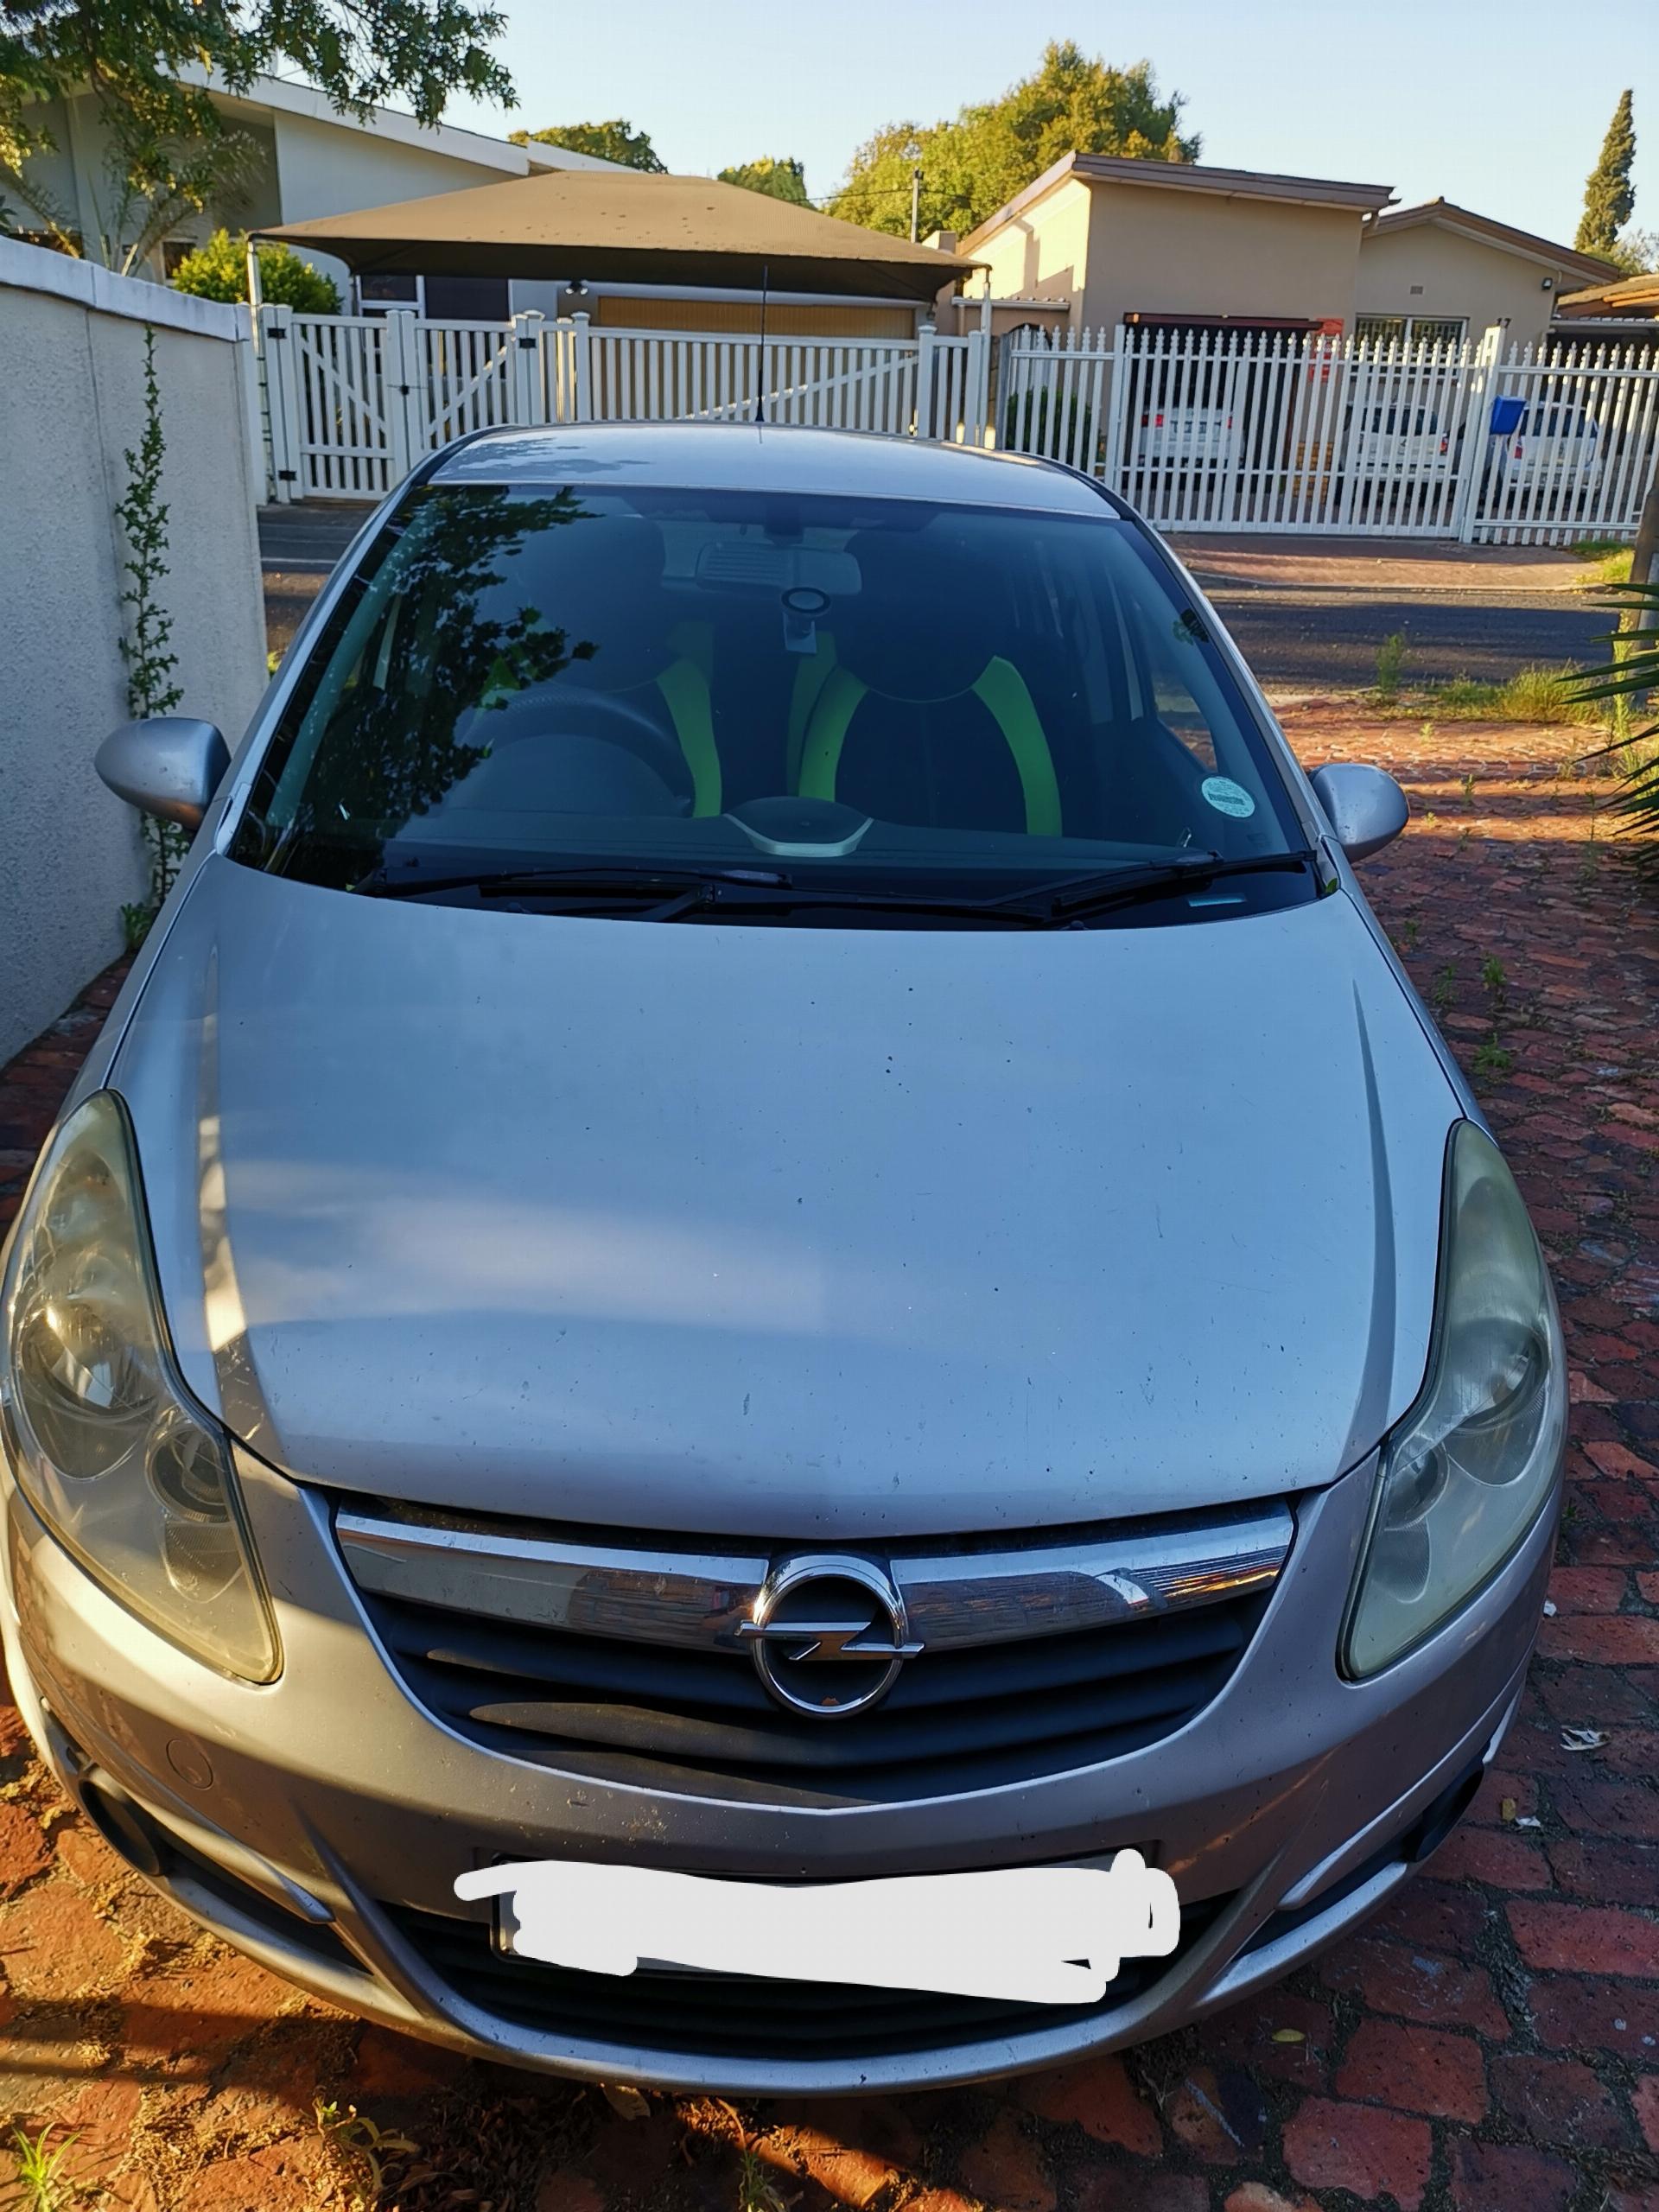 Opel Corsa 1.4 Essentia